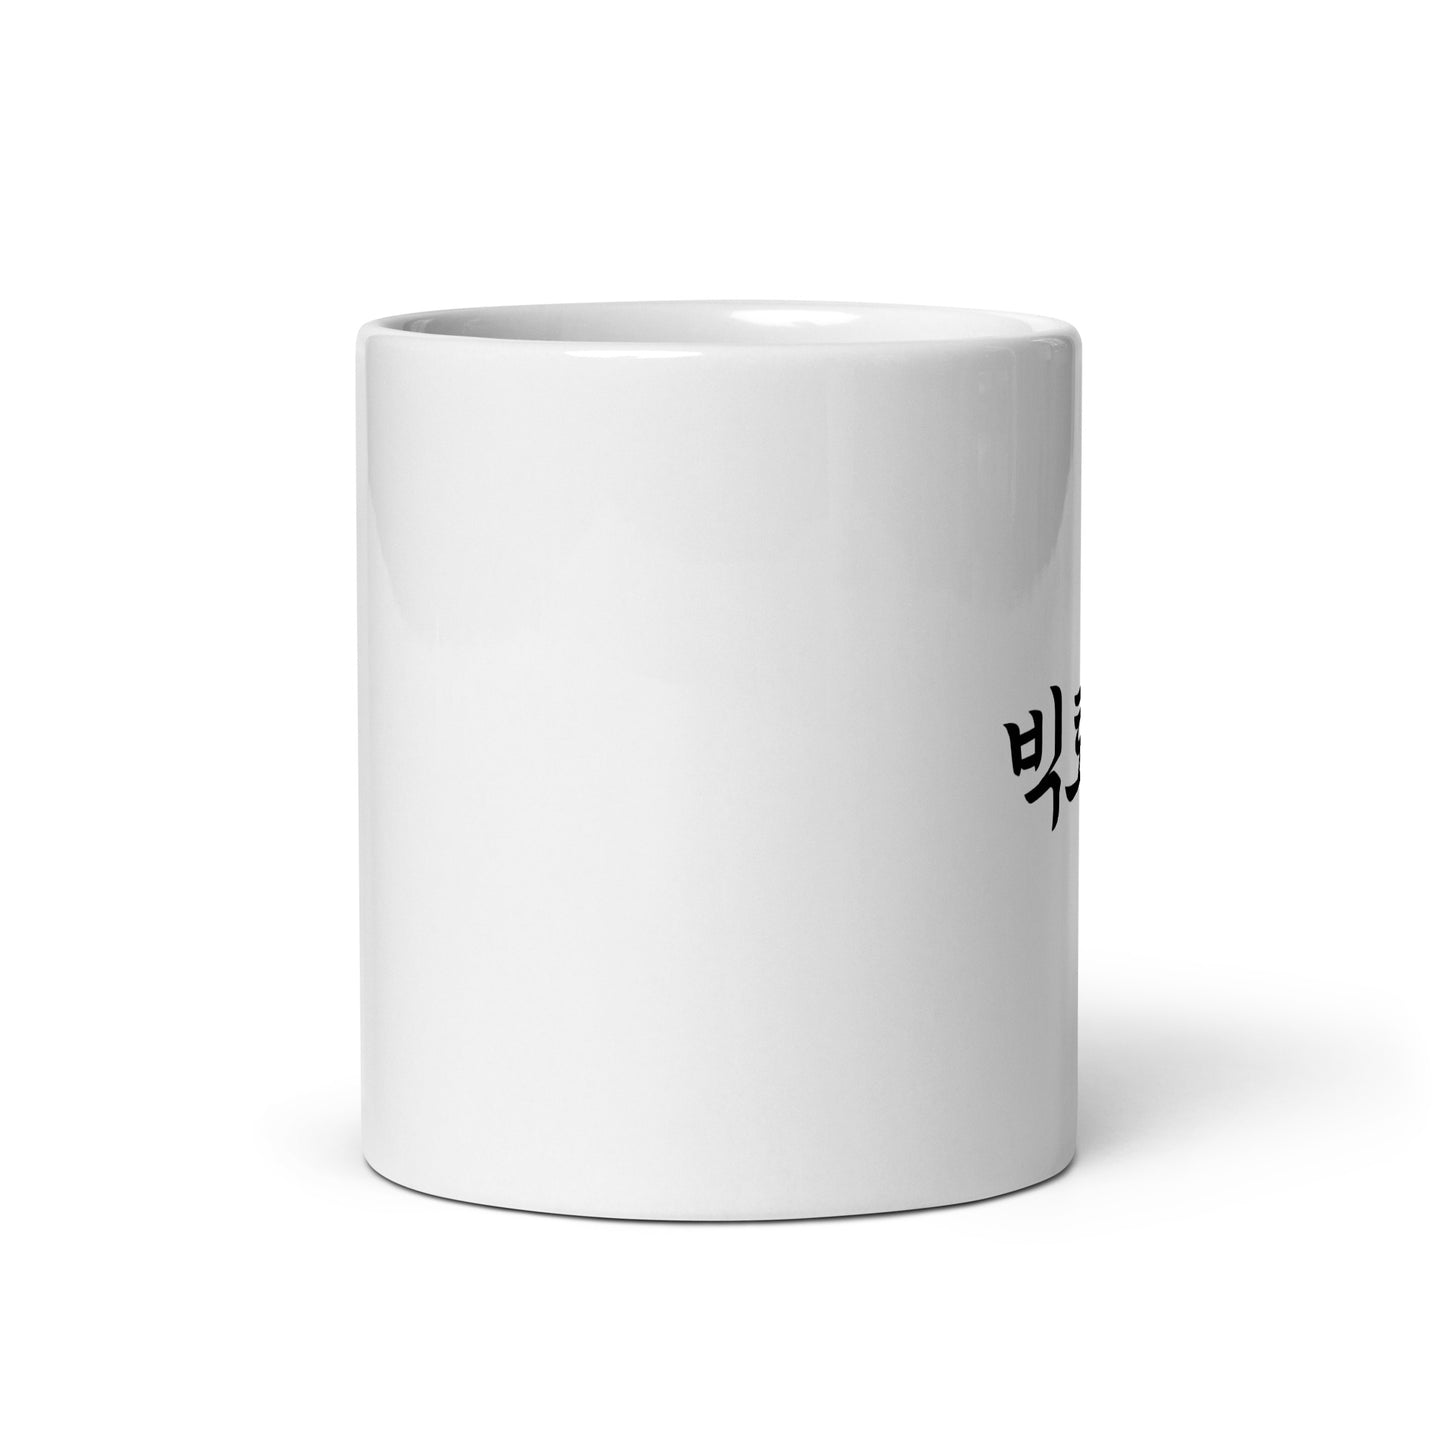 Victoria in Hangul Custom Name Gift Ceramic Mug